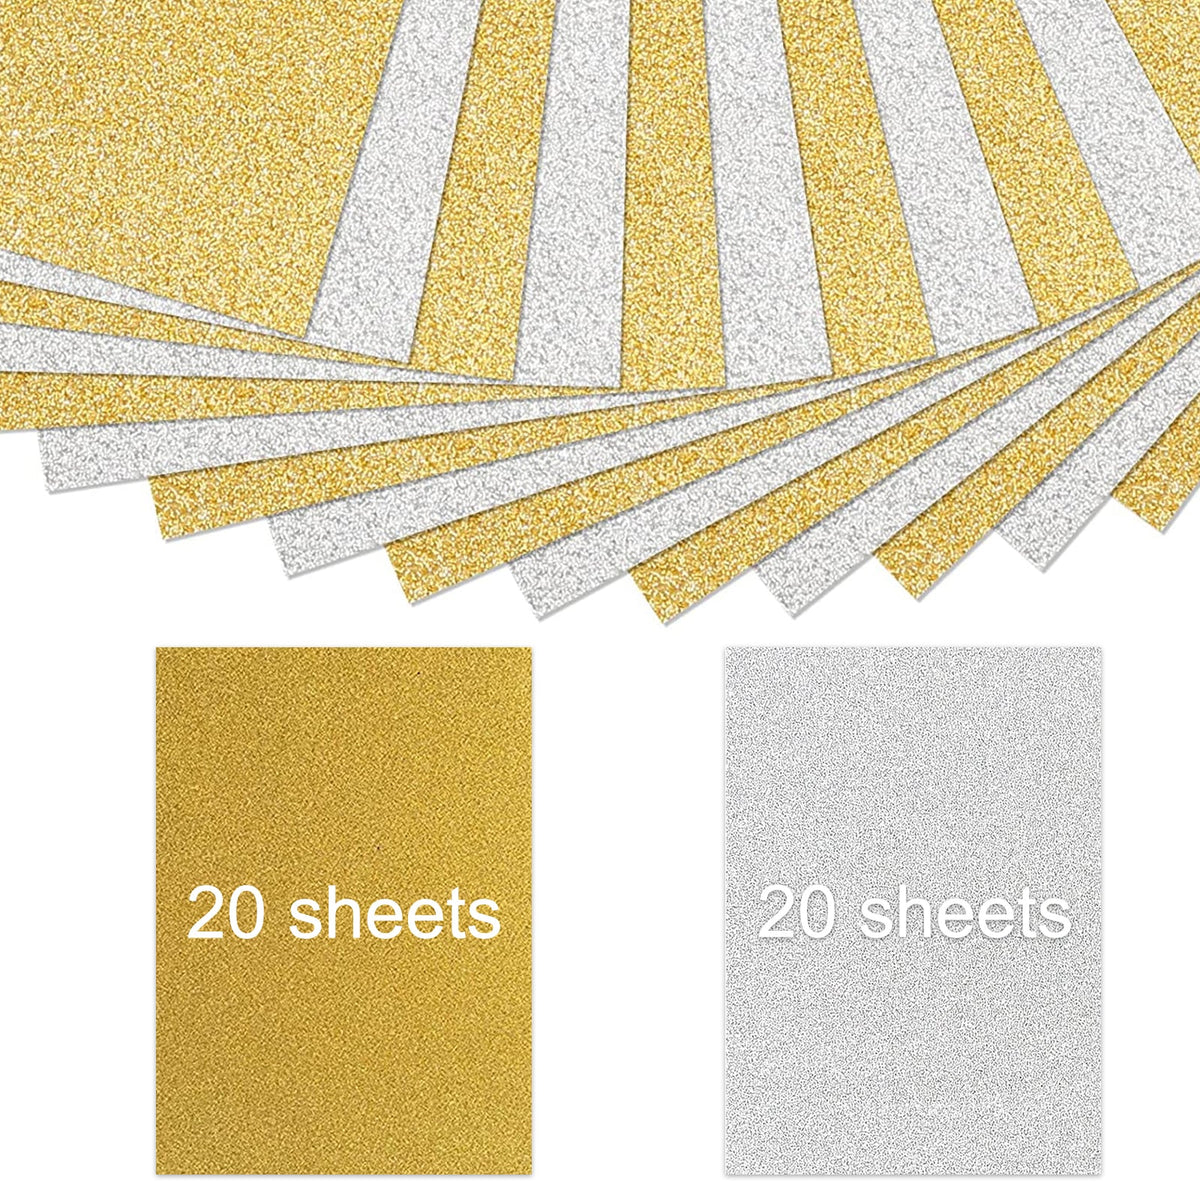 40 Blatt Gold-Silber-Glitzer-Kartonpapier, A4, selbstklebendes Glitzerpapier, 250 g/m², zum Basteln